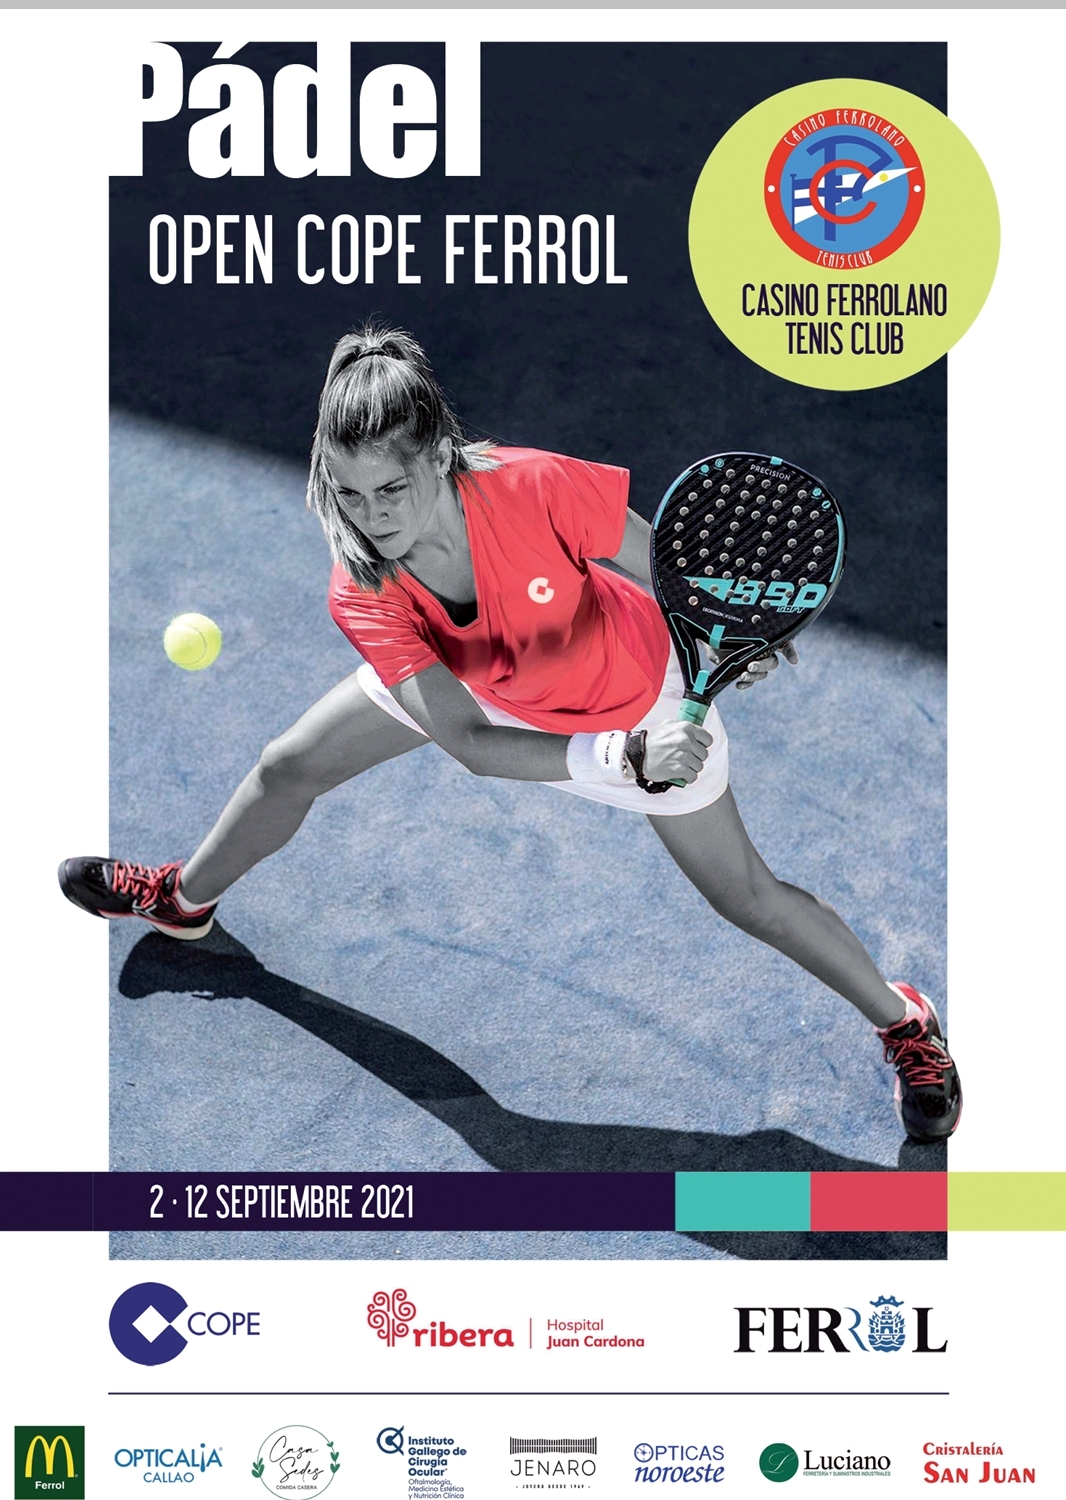 Cartel del Torneo Padel Open Cope Ferrol